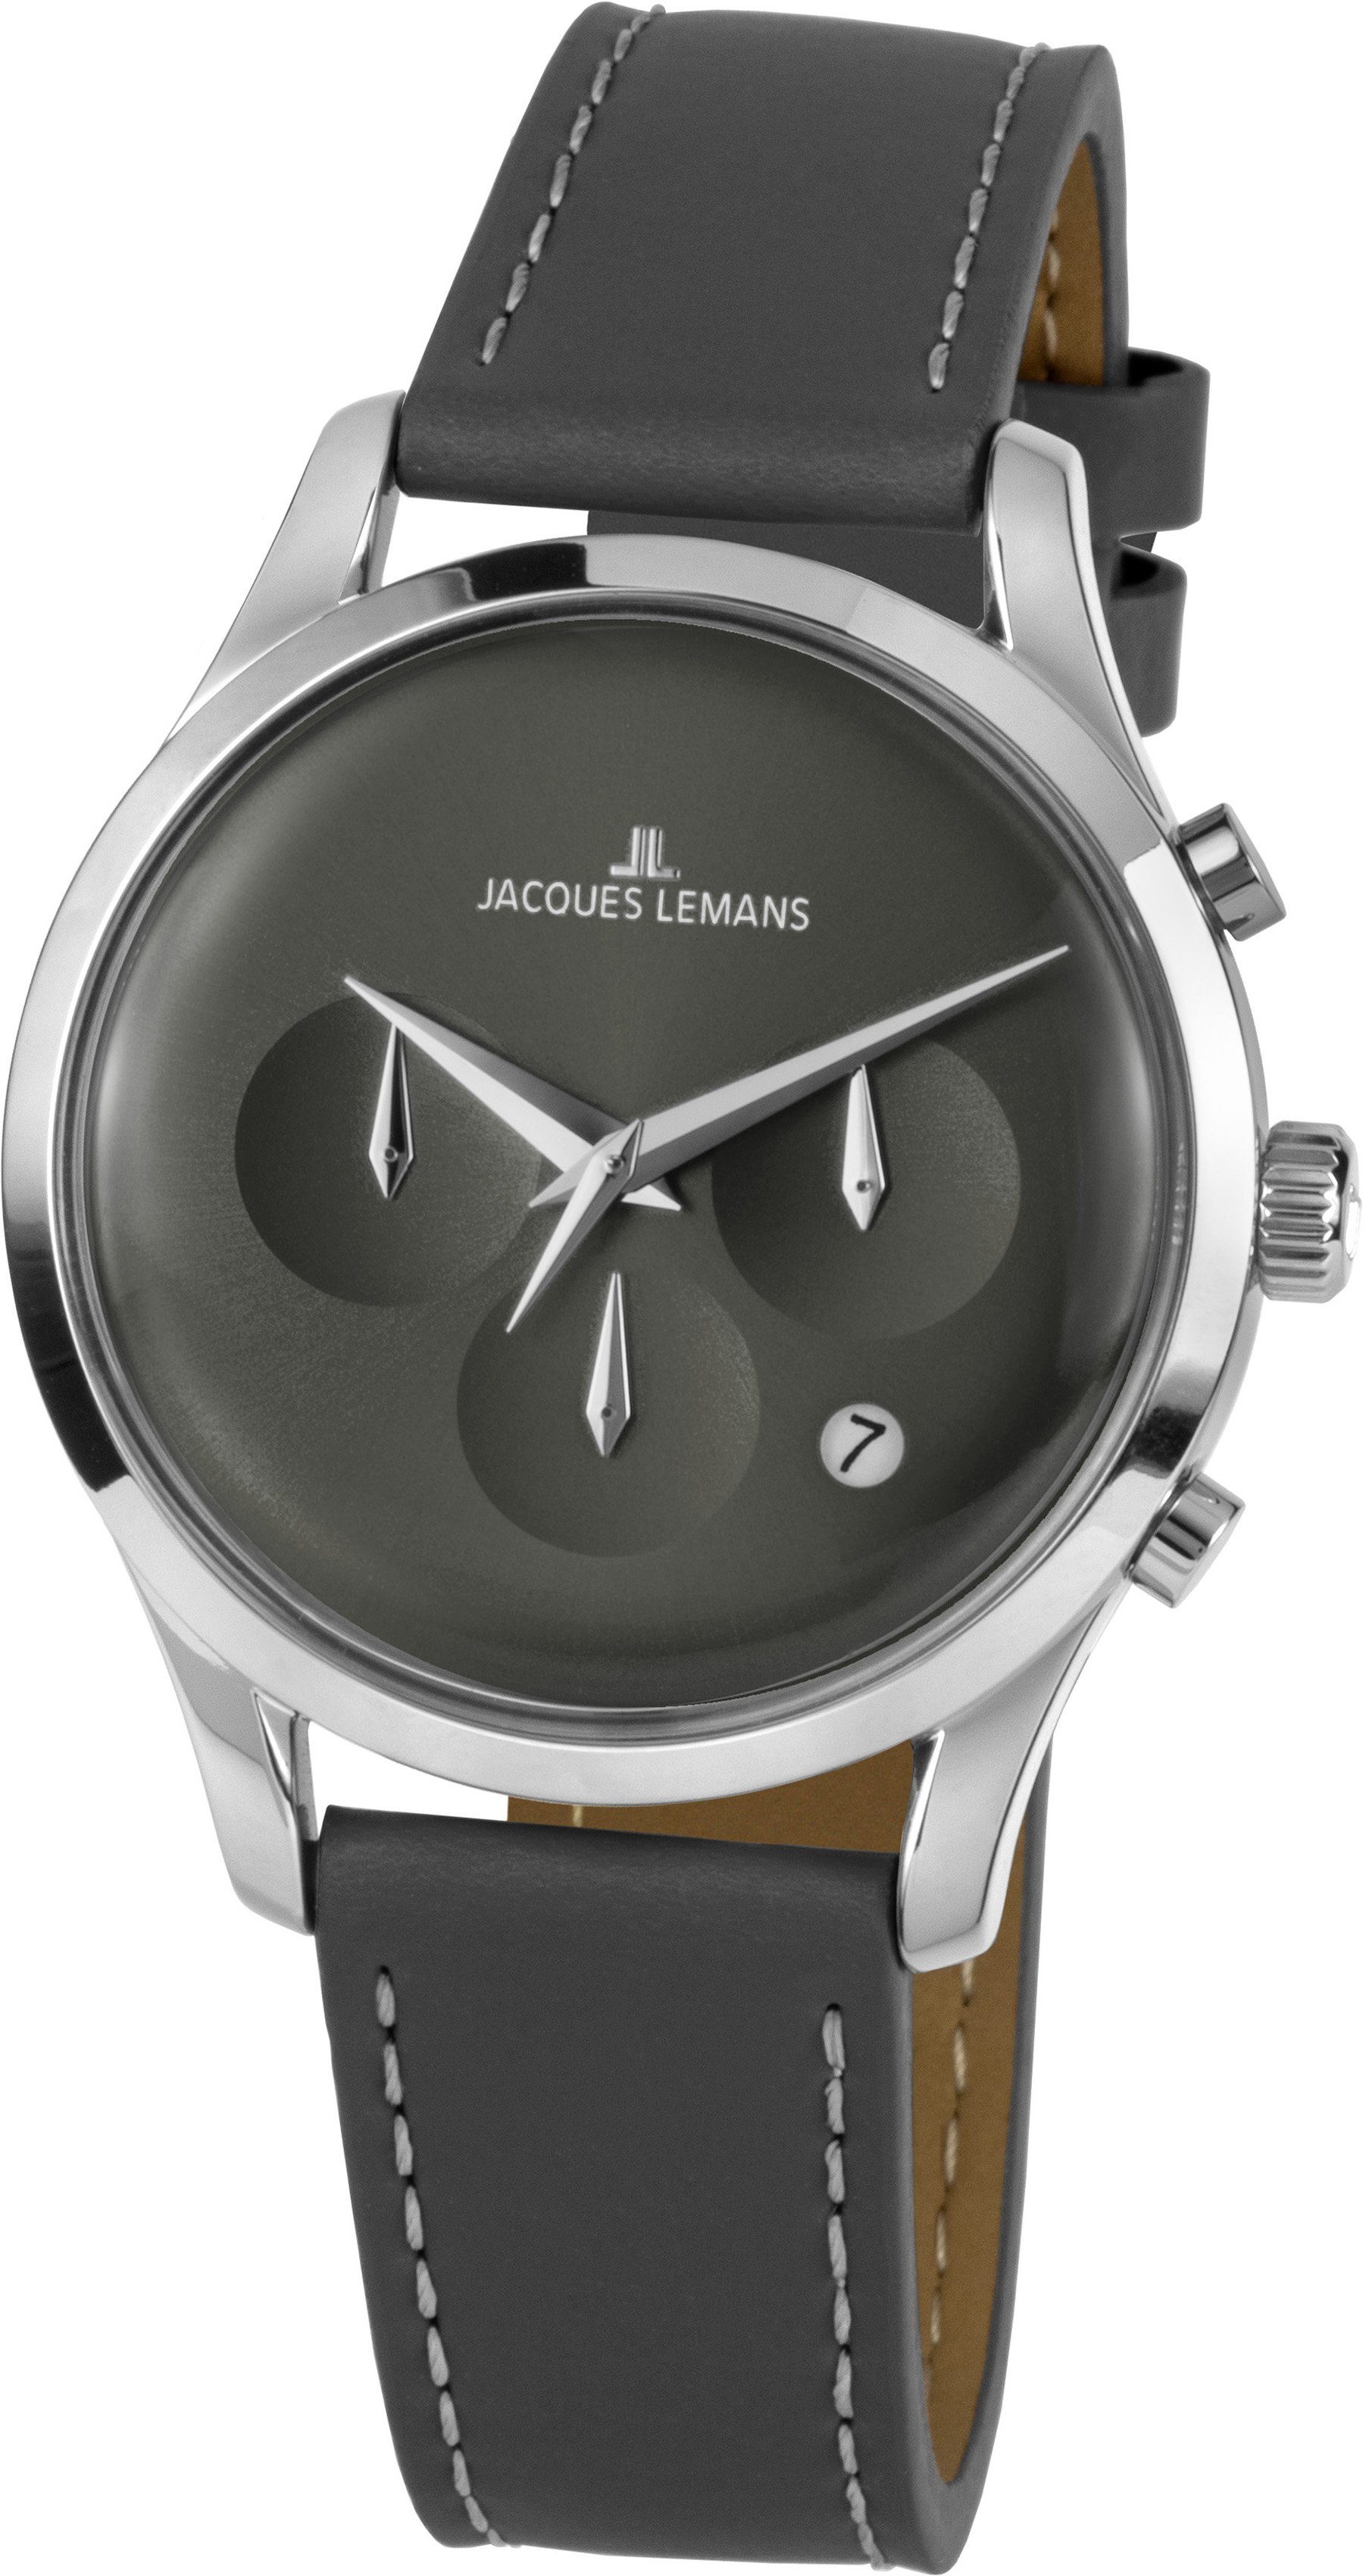 Jacques Lemans Chronograph Retro Classic, 1-2067A grau